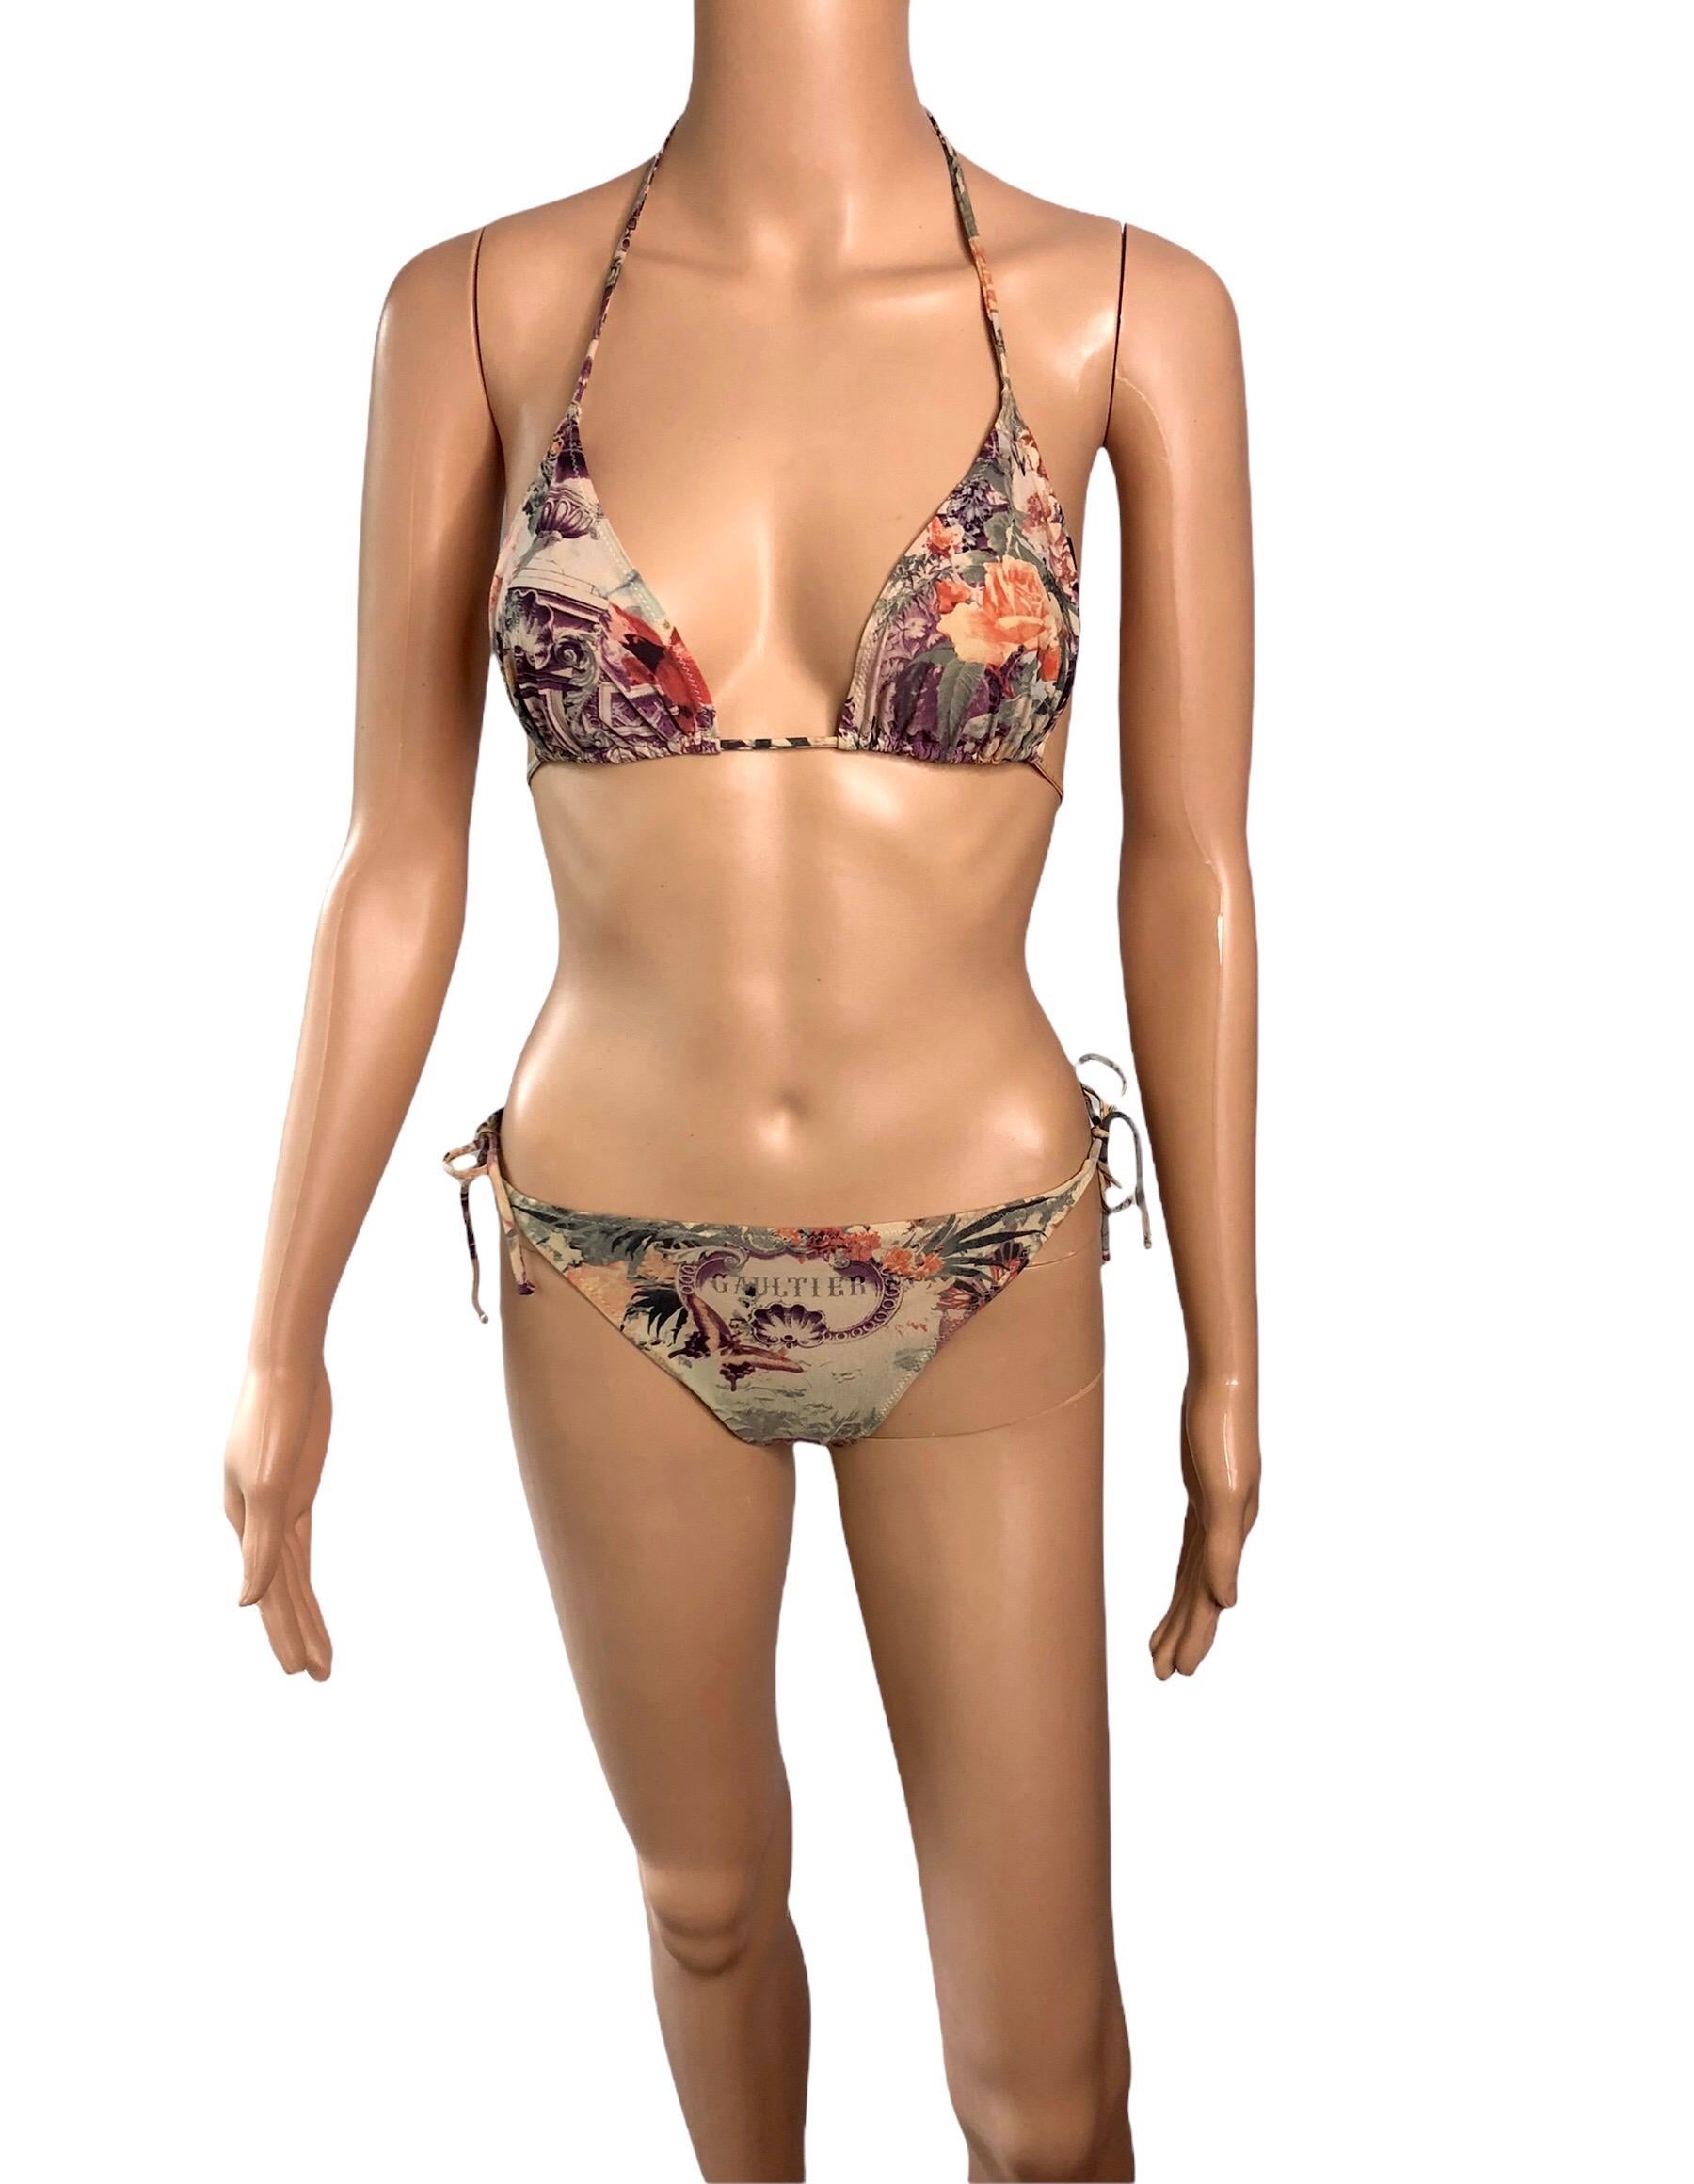 Brown Jean Paul Gaultier Soleil S/S 1999 Flamingo Tropical Bikini Swimsuit 2 Piece Set For Sale